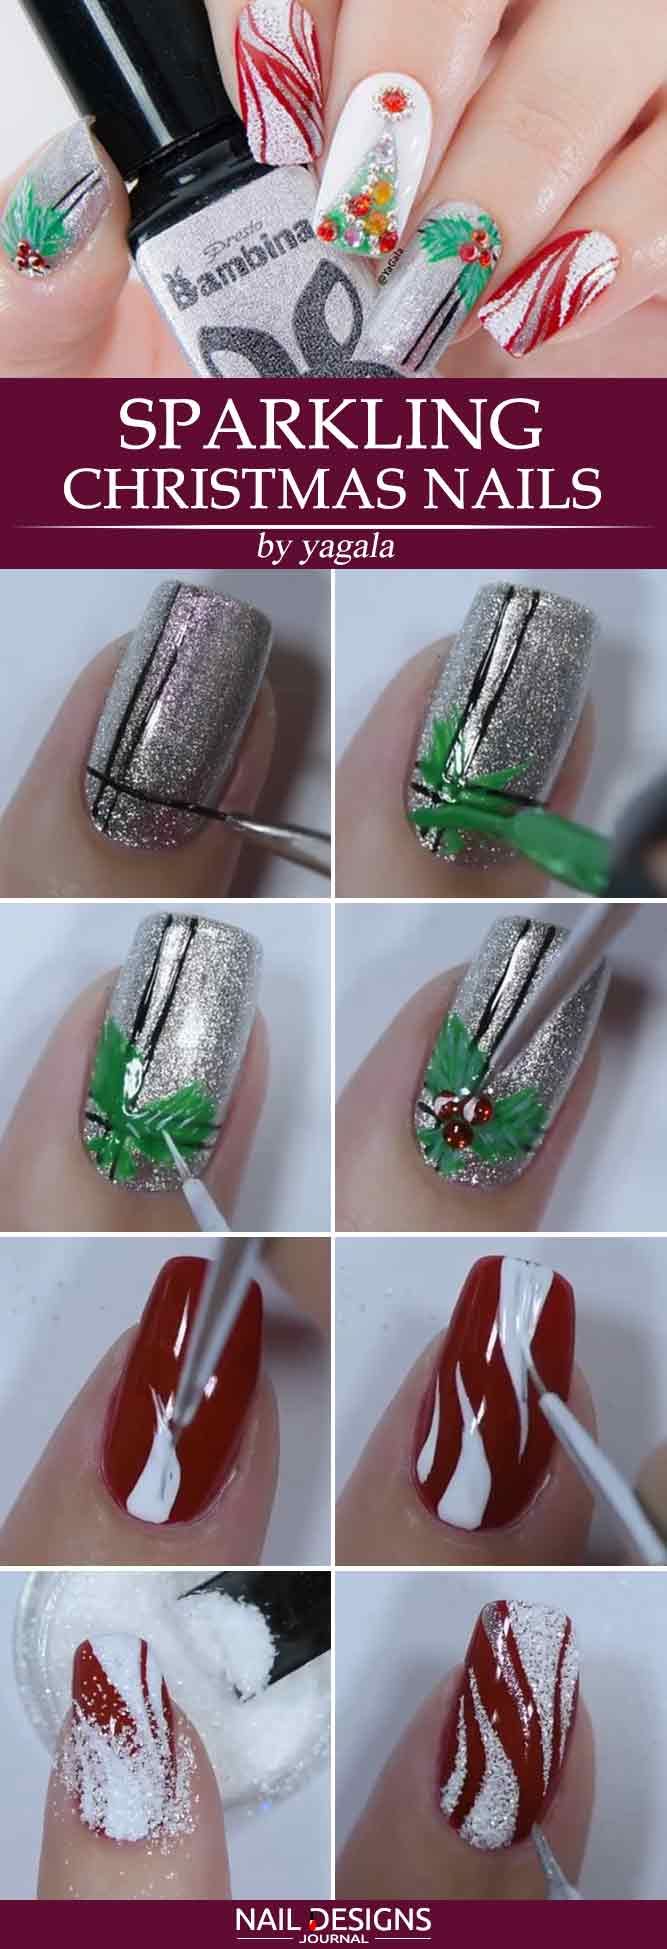 Sparkling Christmas Nails